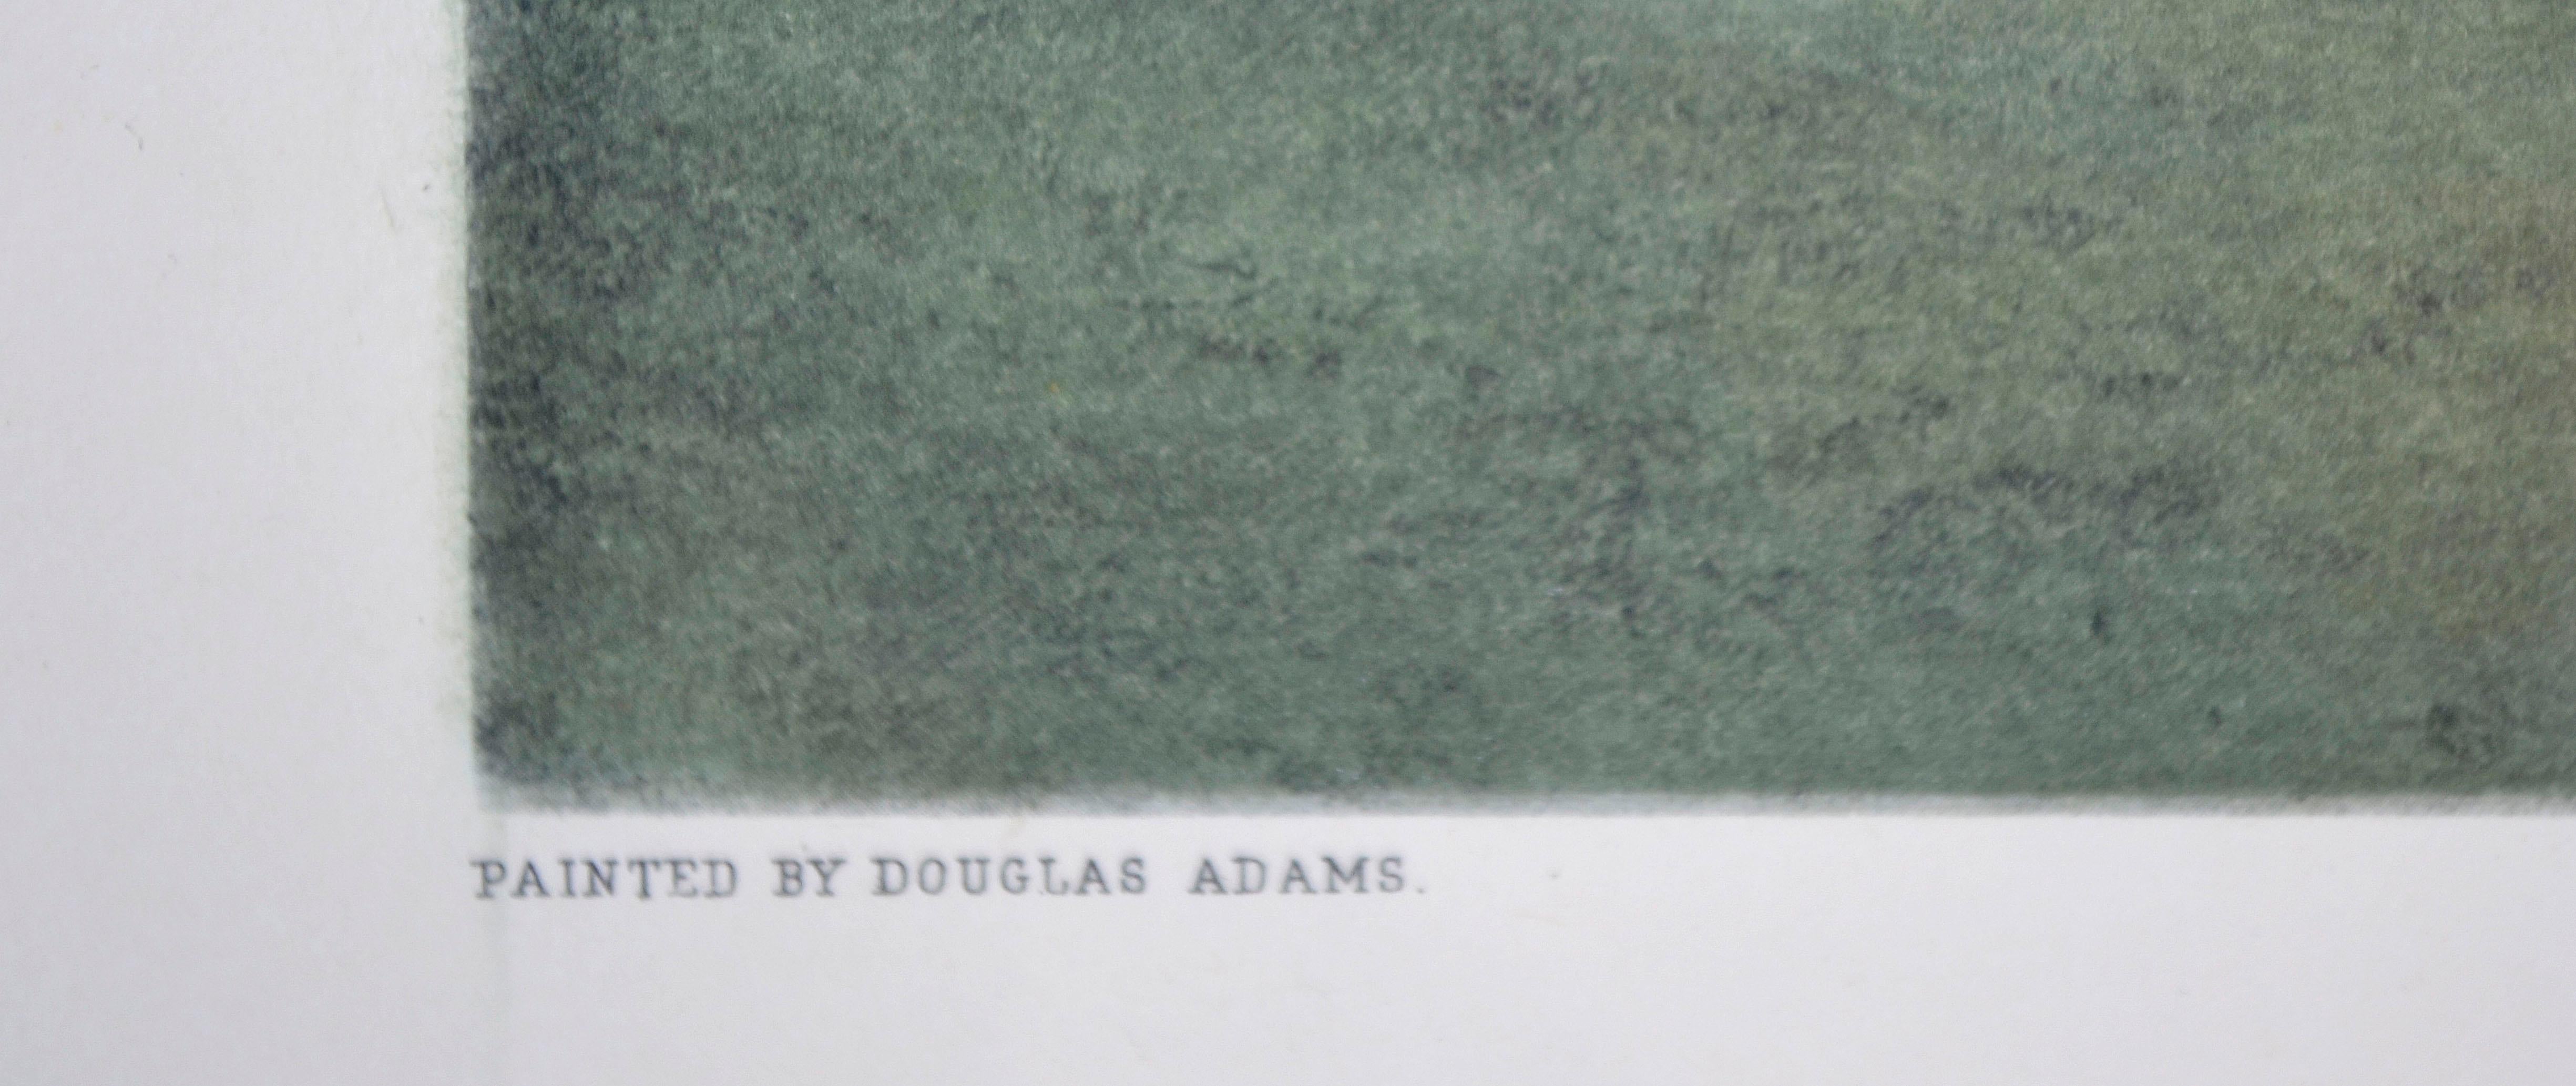 douglas adams artist